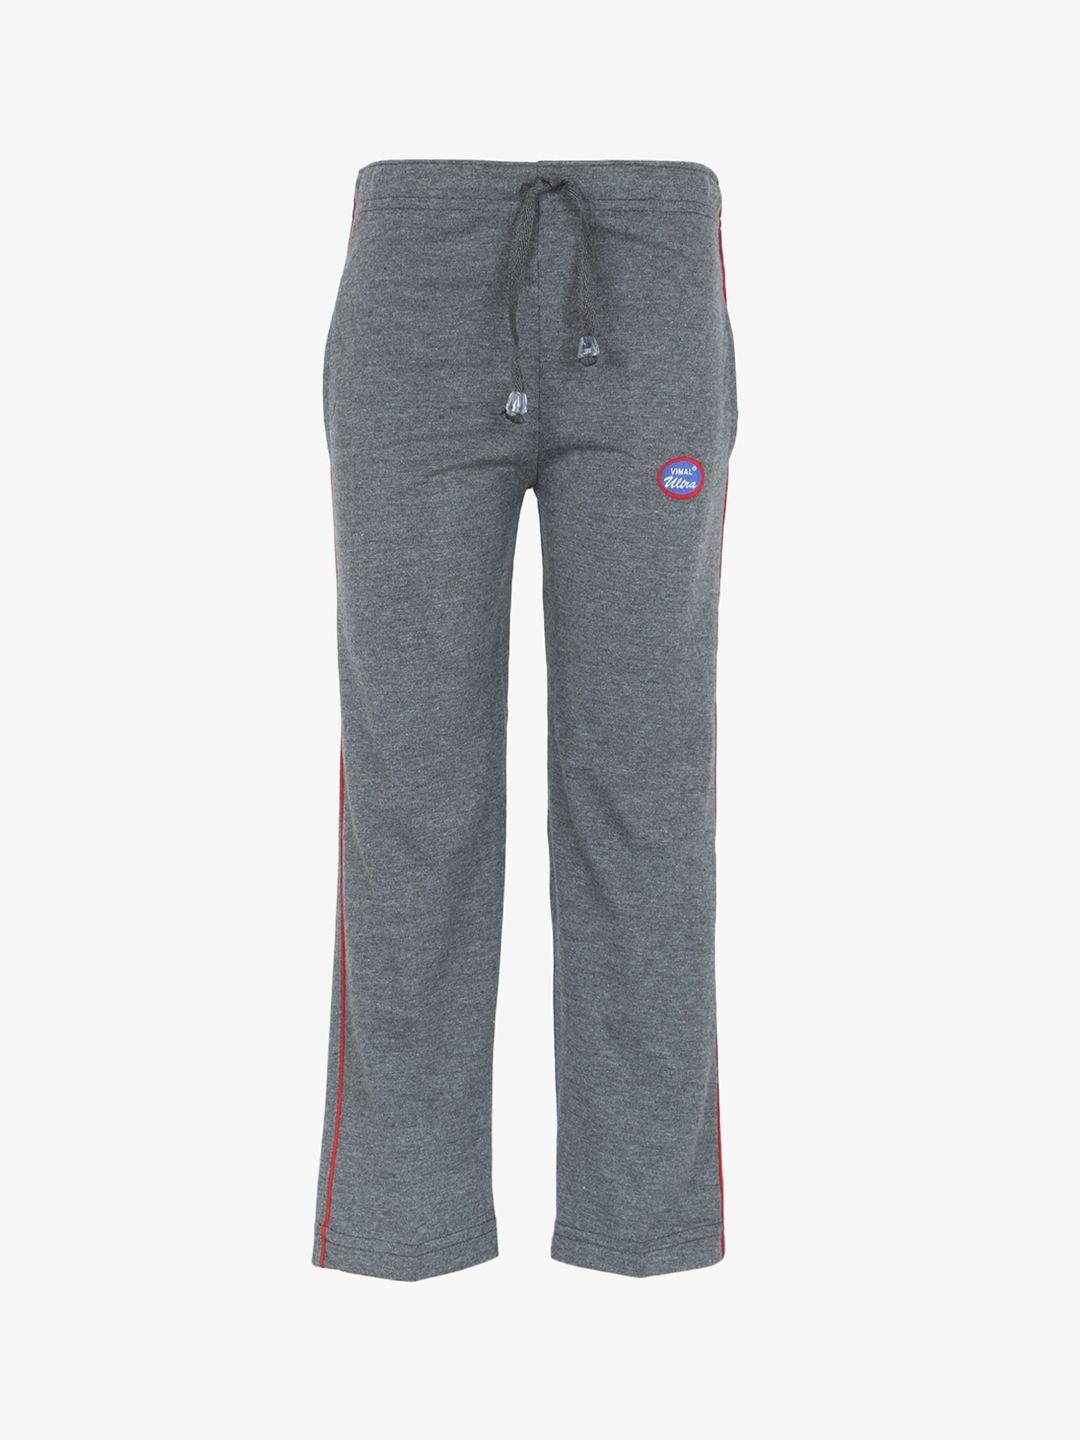 vimal-jonney-unisex-kids-grey-solid-cotton-track-pants